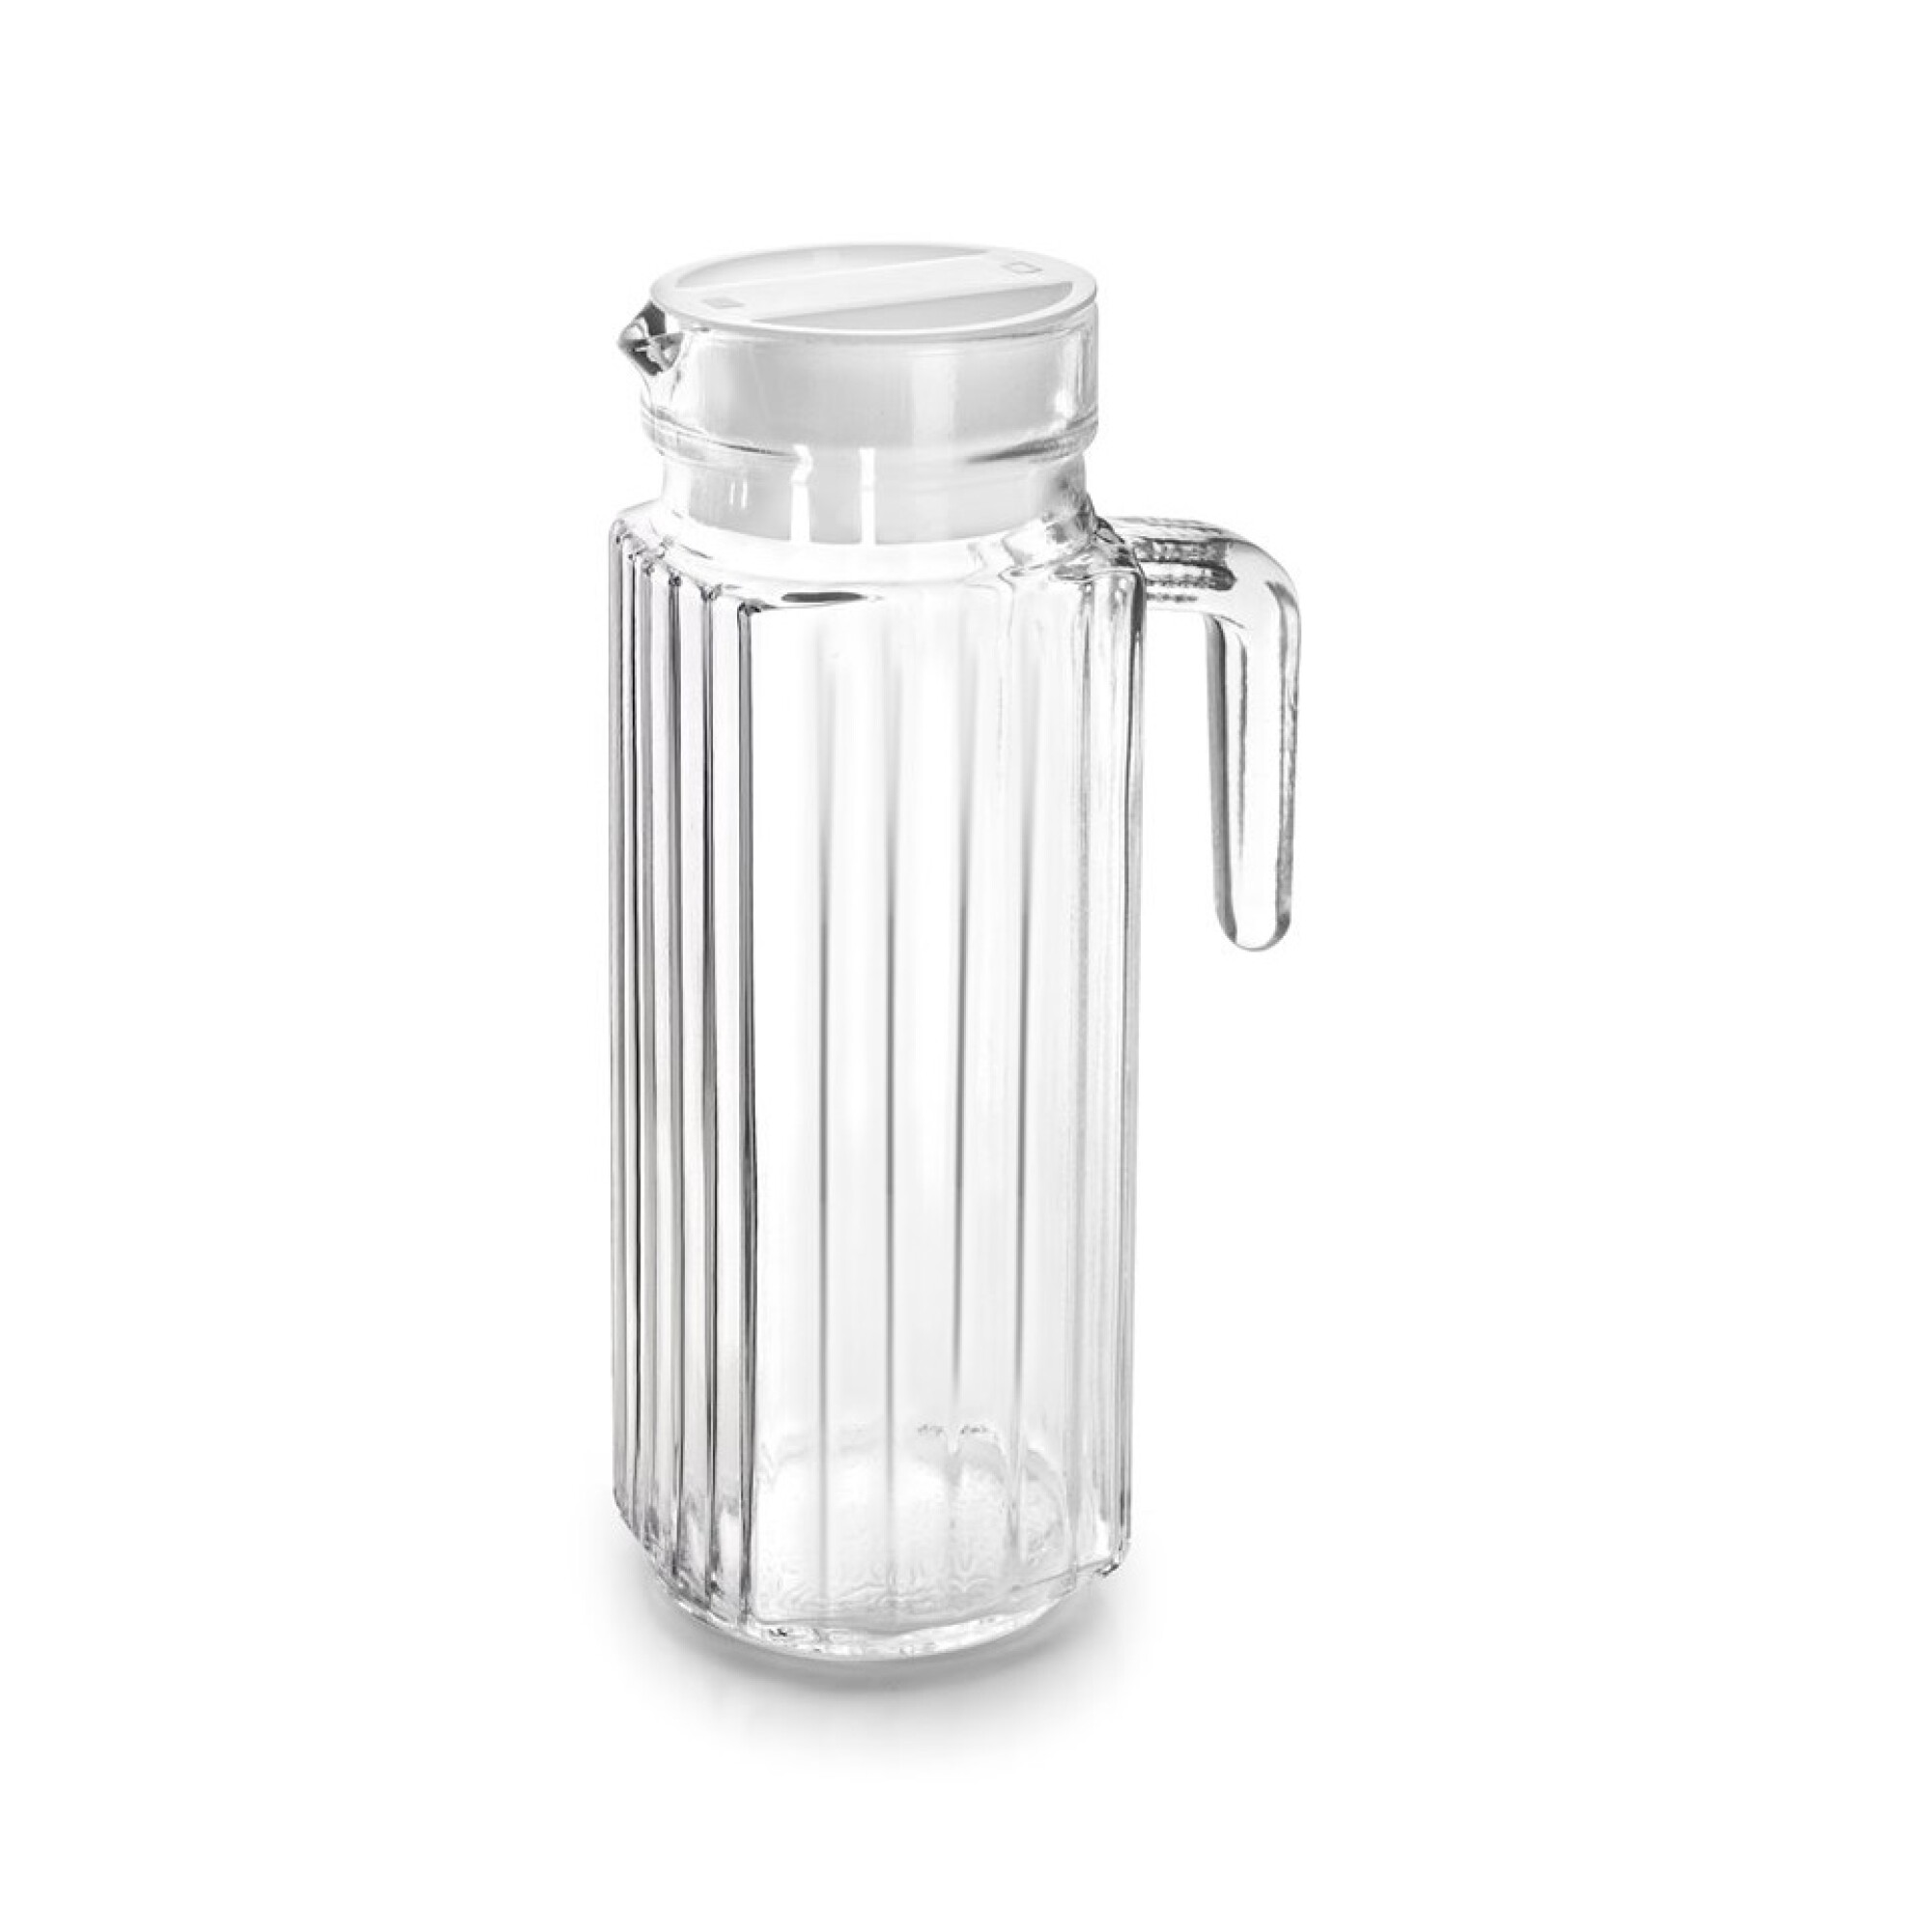 Miudeco jarra agua cristal, jarra cristal 2.2 litros / 74 oz con